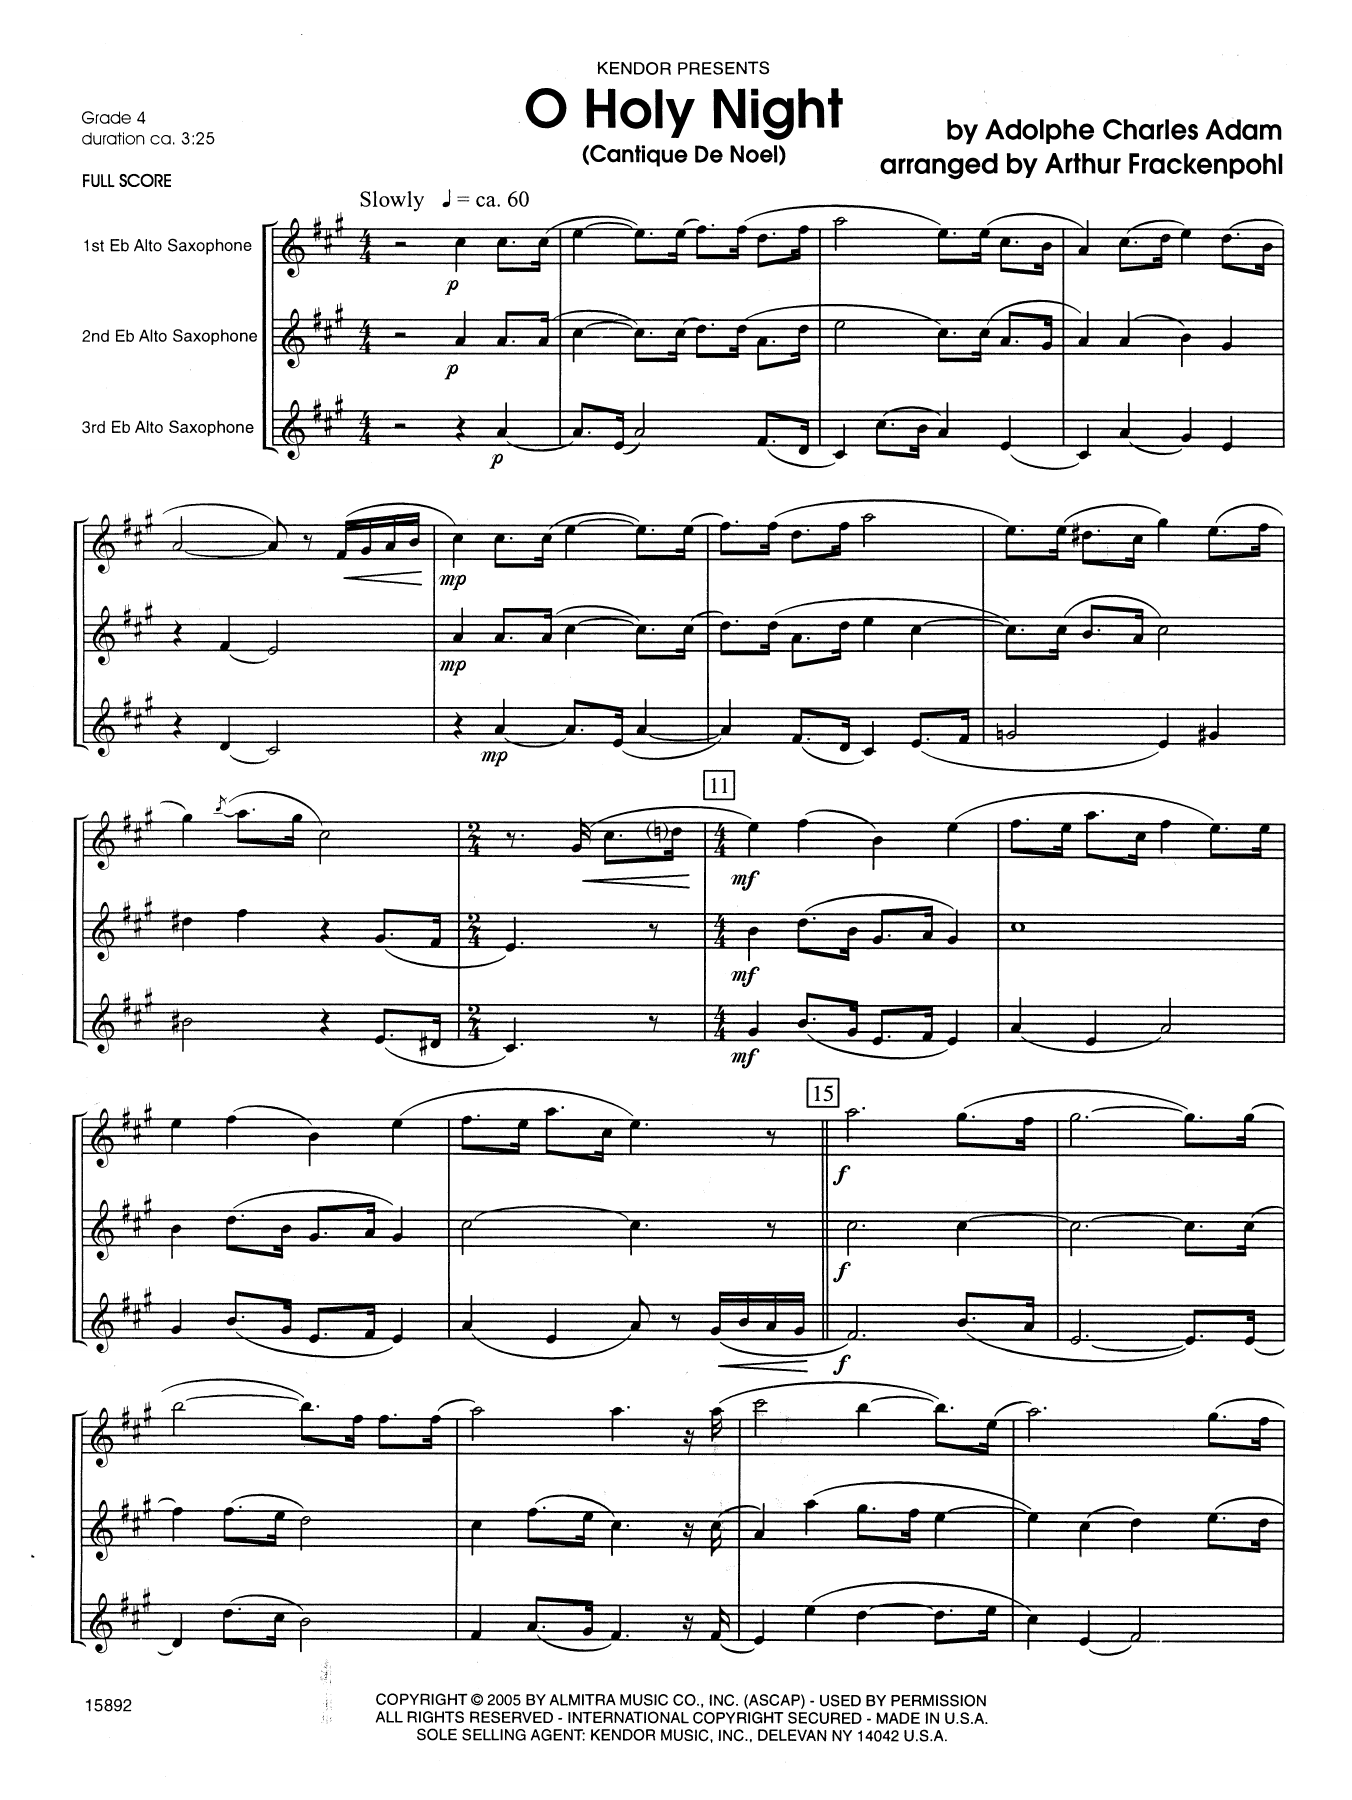 Arthur Frackenpohl O Holy Night (Cantique de Noel) - Full Score sheet music notes and chords. Download Printable PDF.